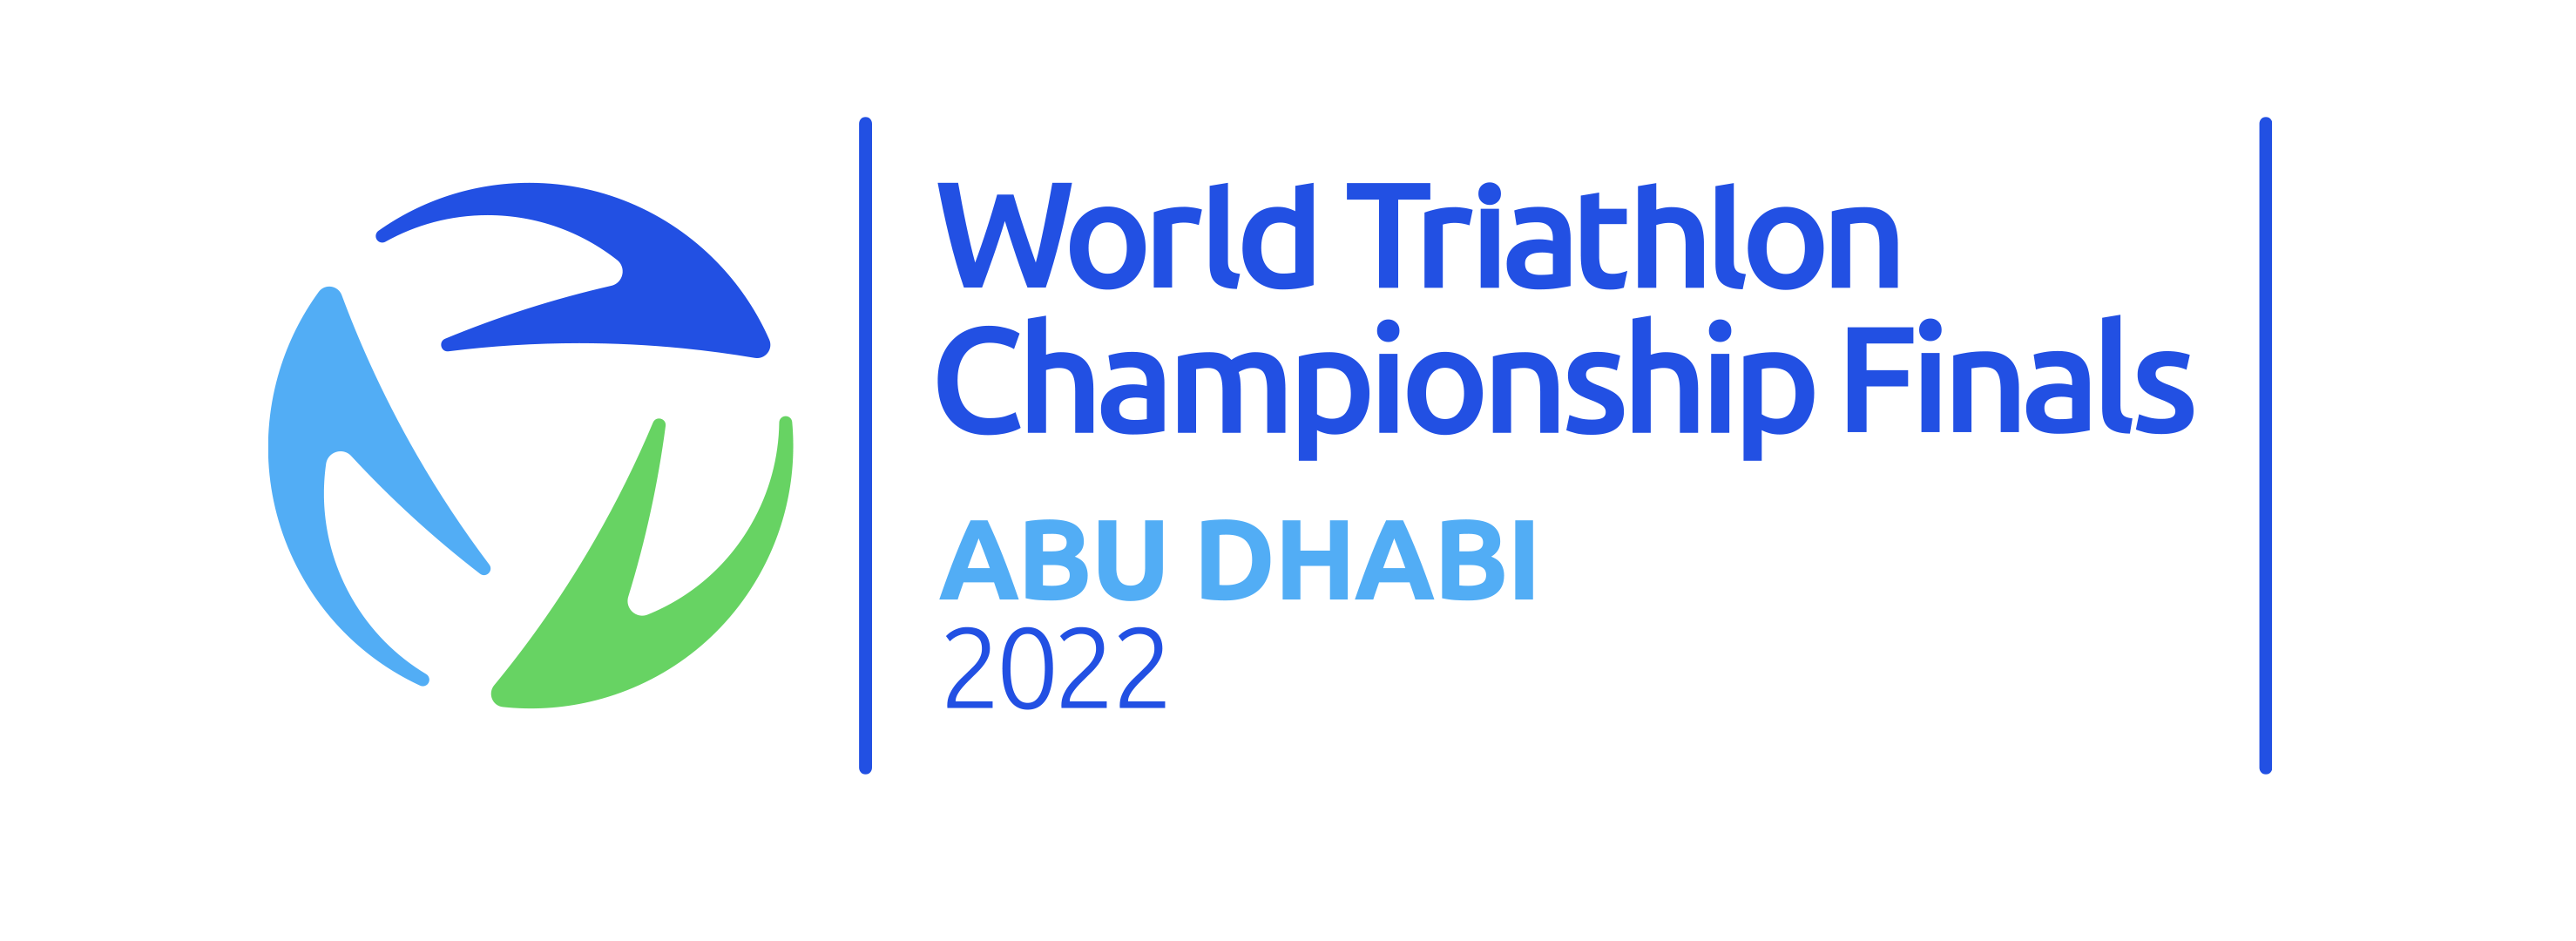 2022 World Triathlon Championship Finals Abu Dhabi logo